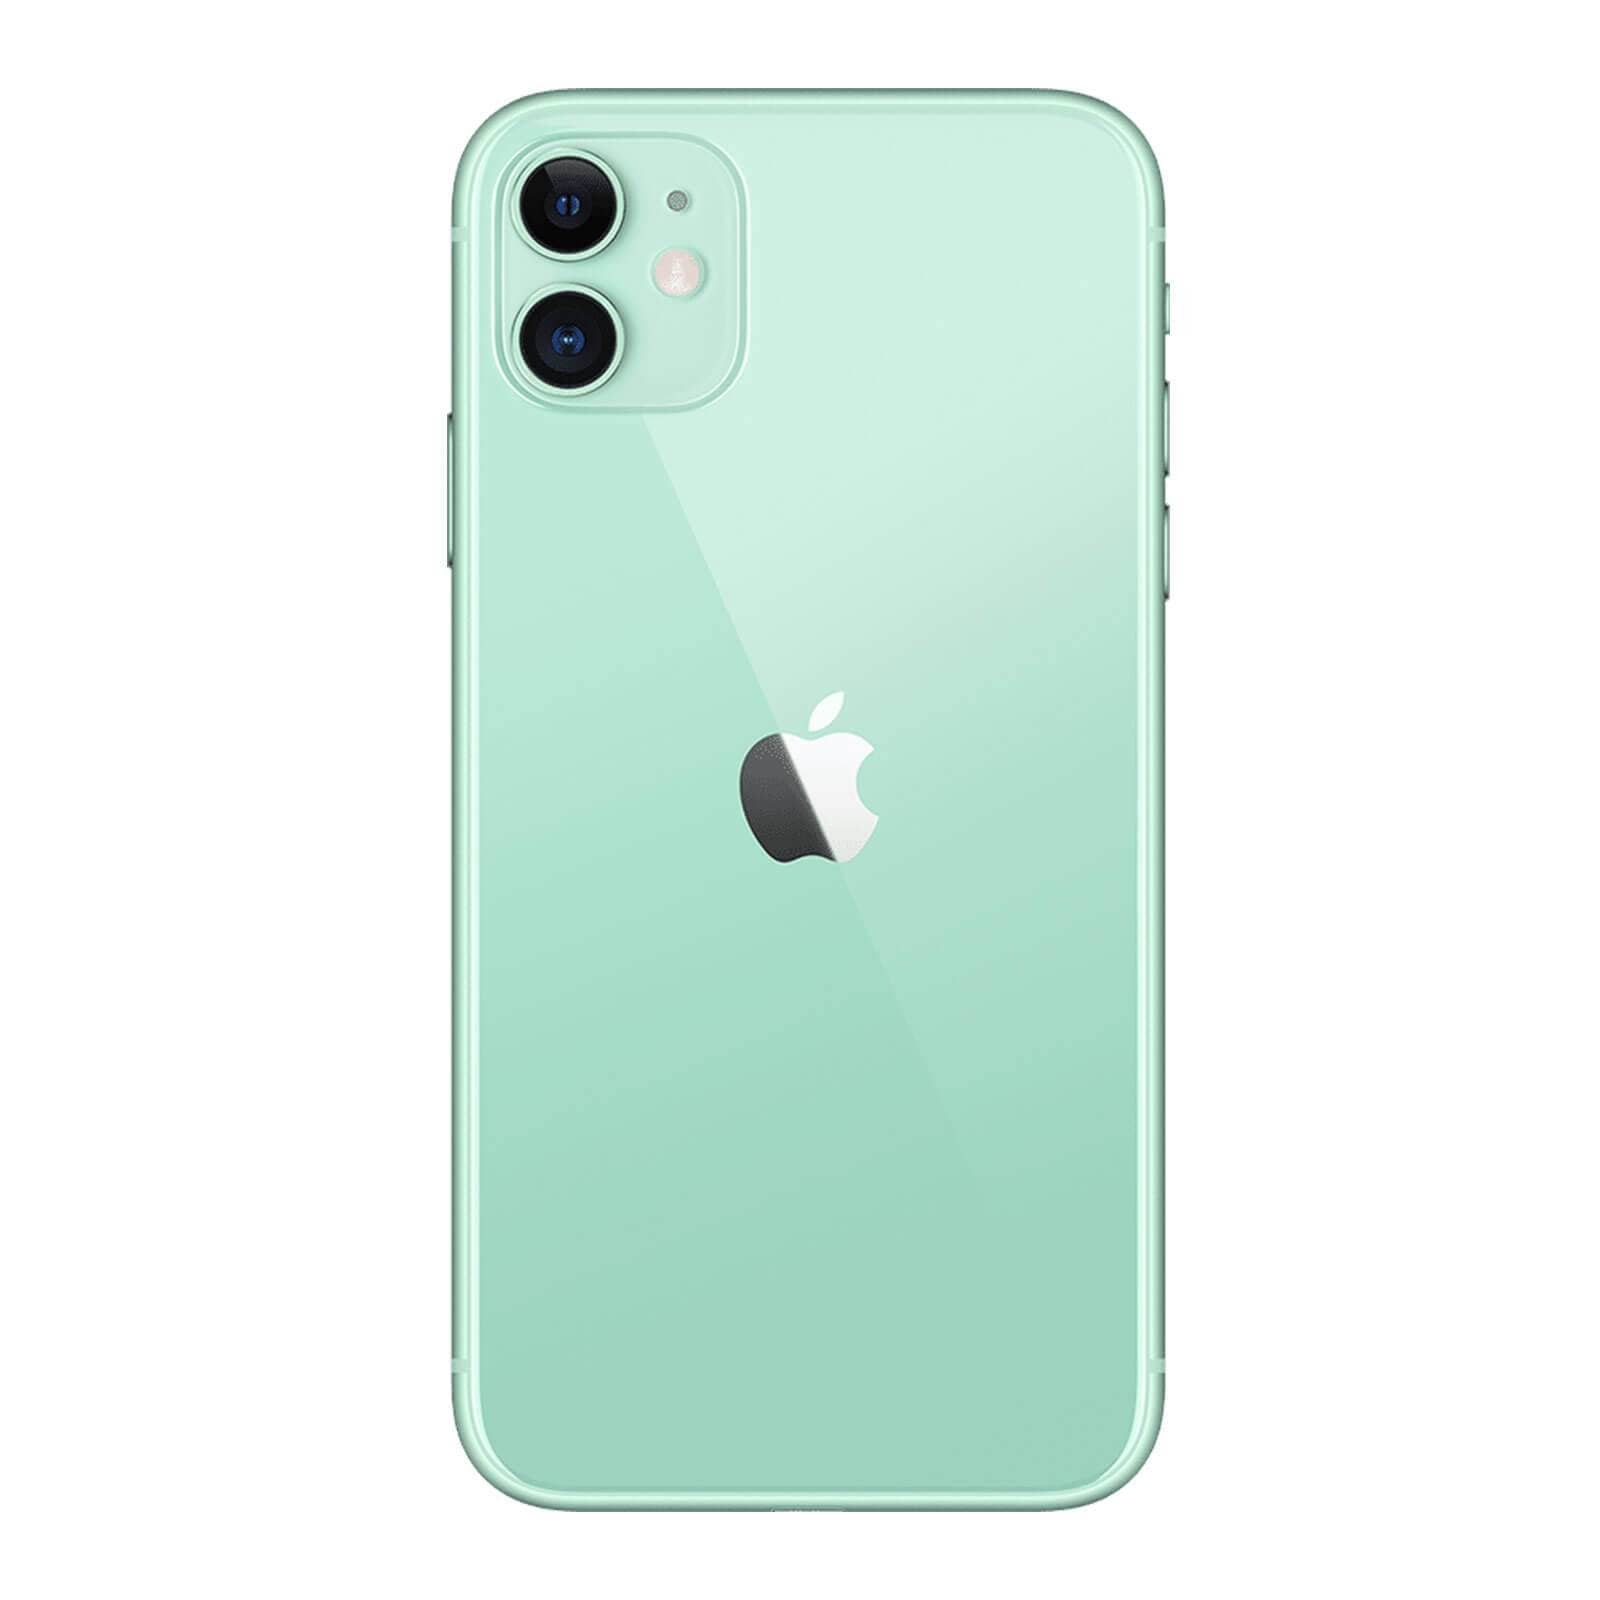 Apple iPhone 11 128GB Green Very Good - Unlocked